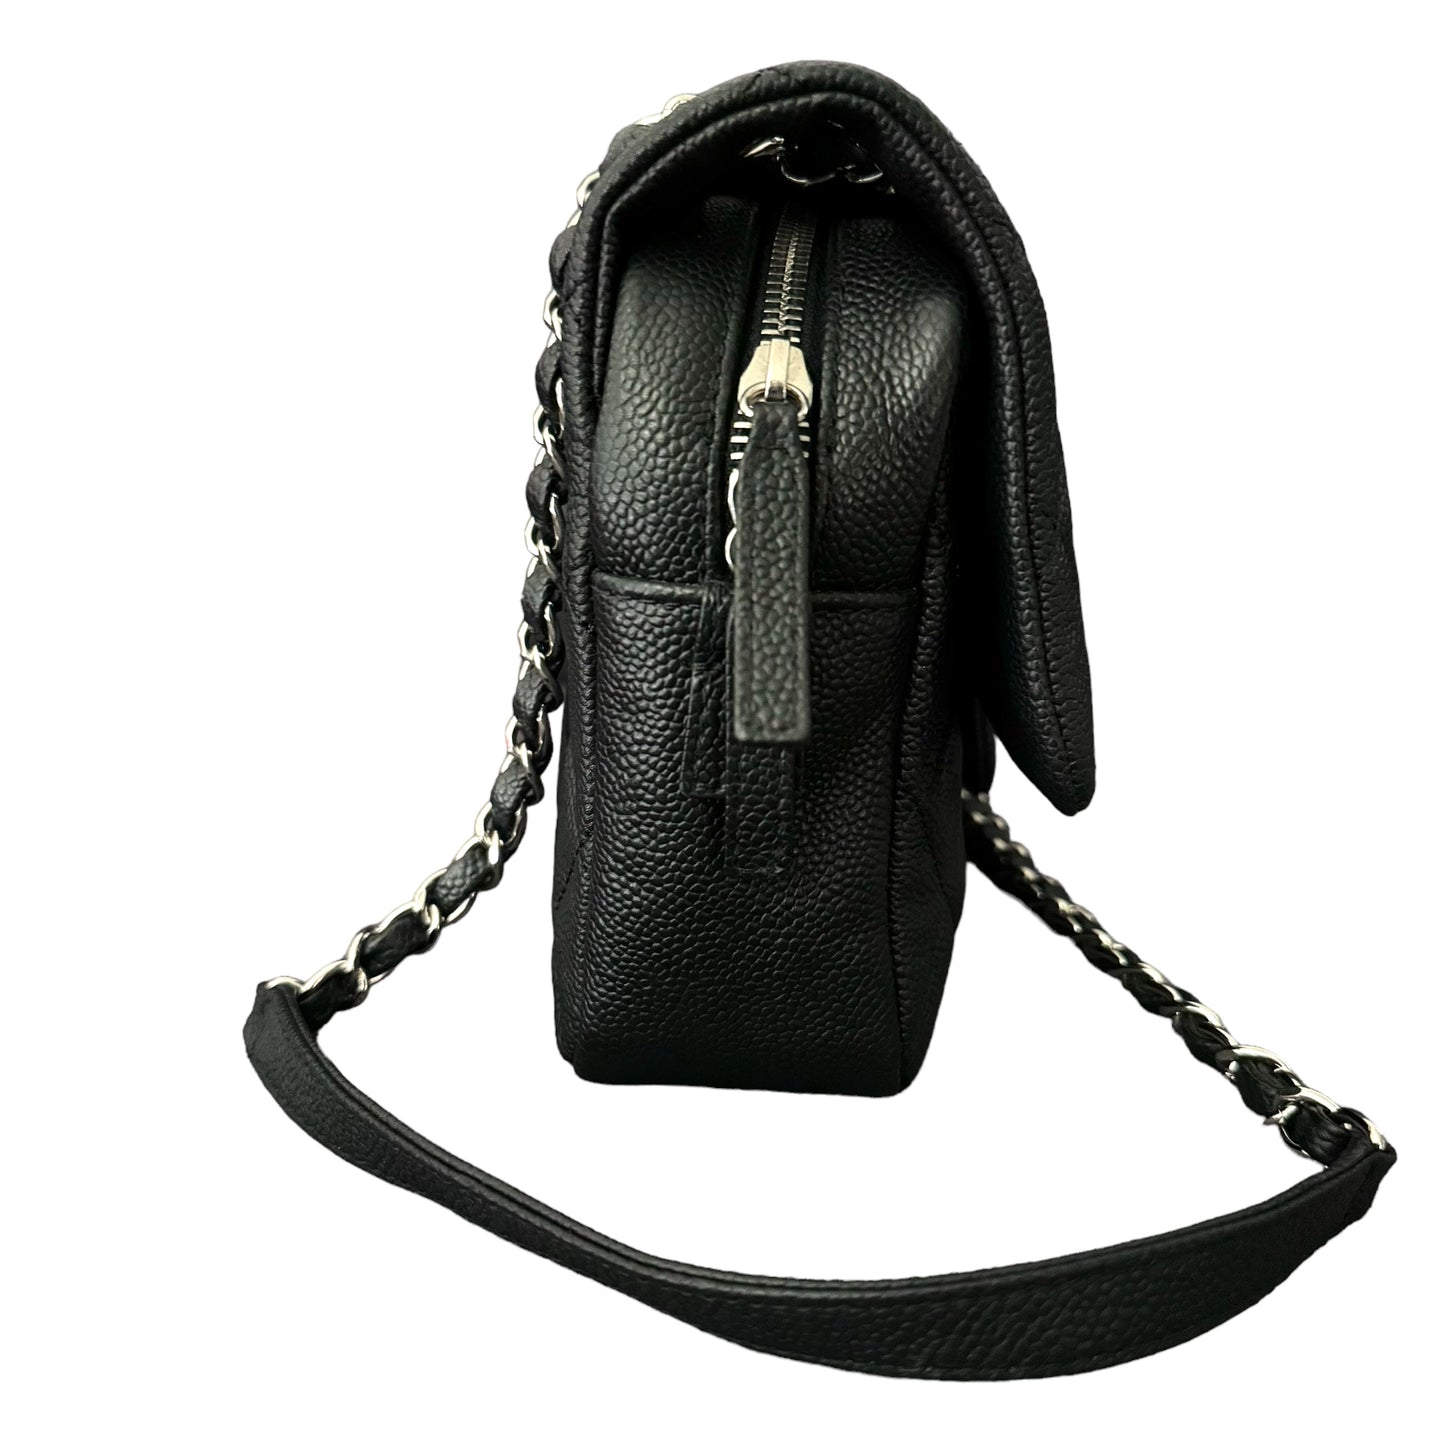 Chanel Easy Black Caviar Zip Silver Hardware Small Bag